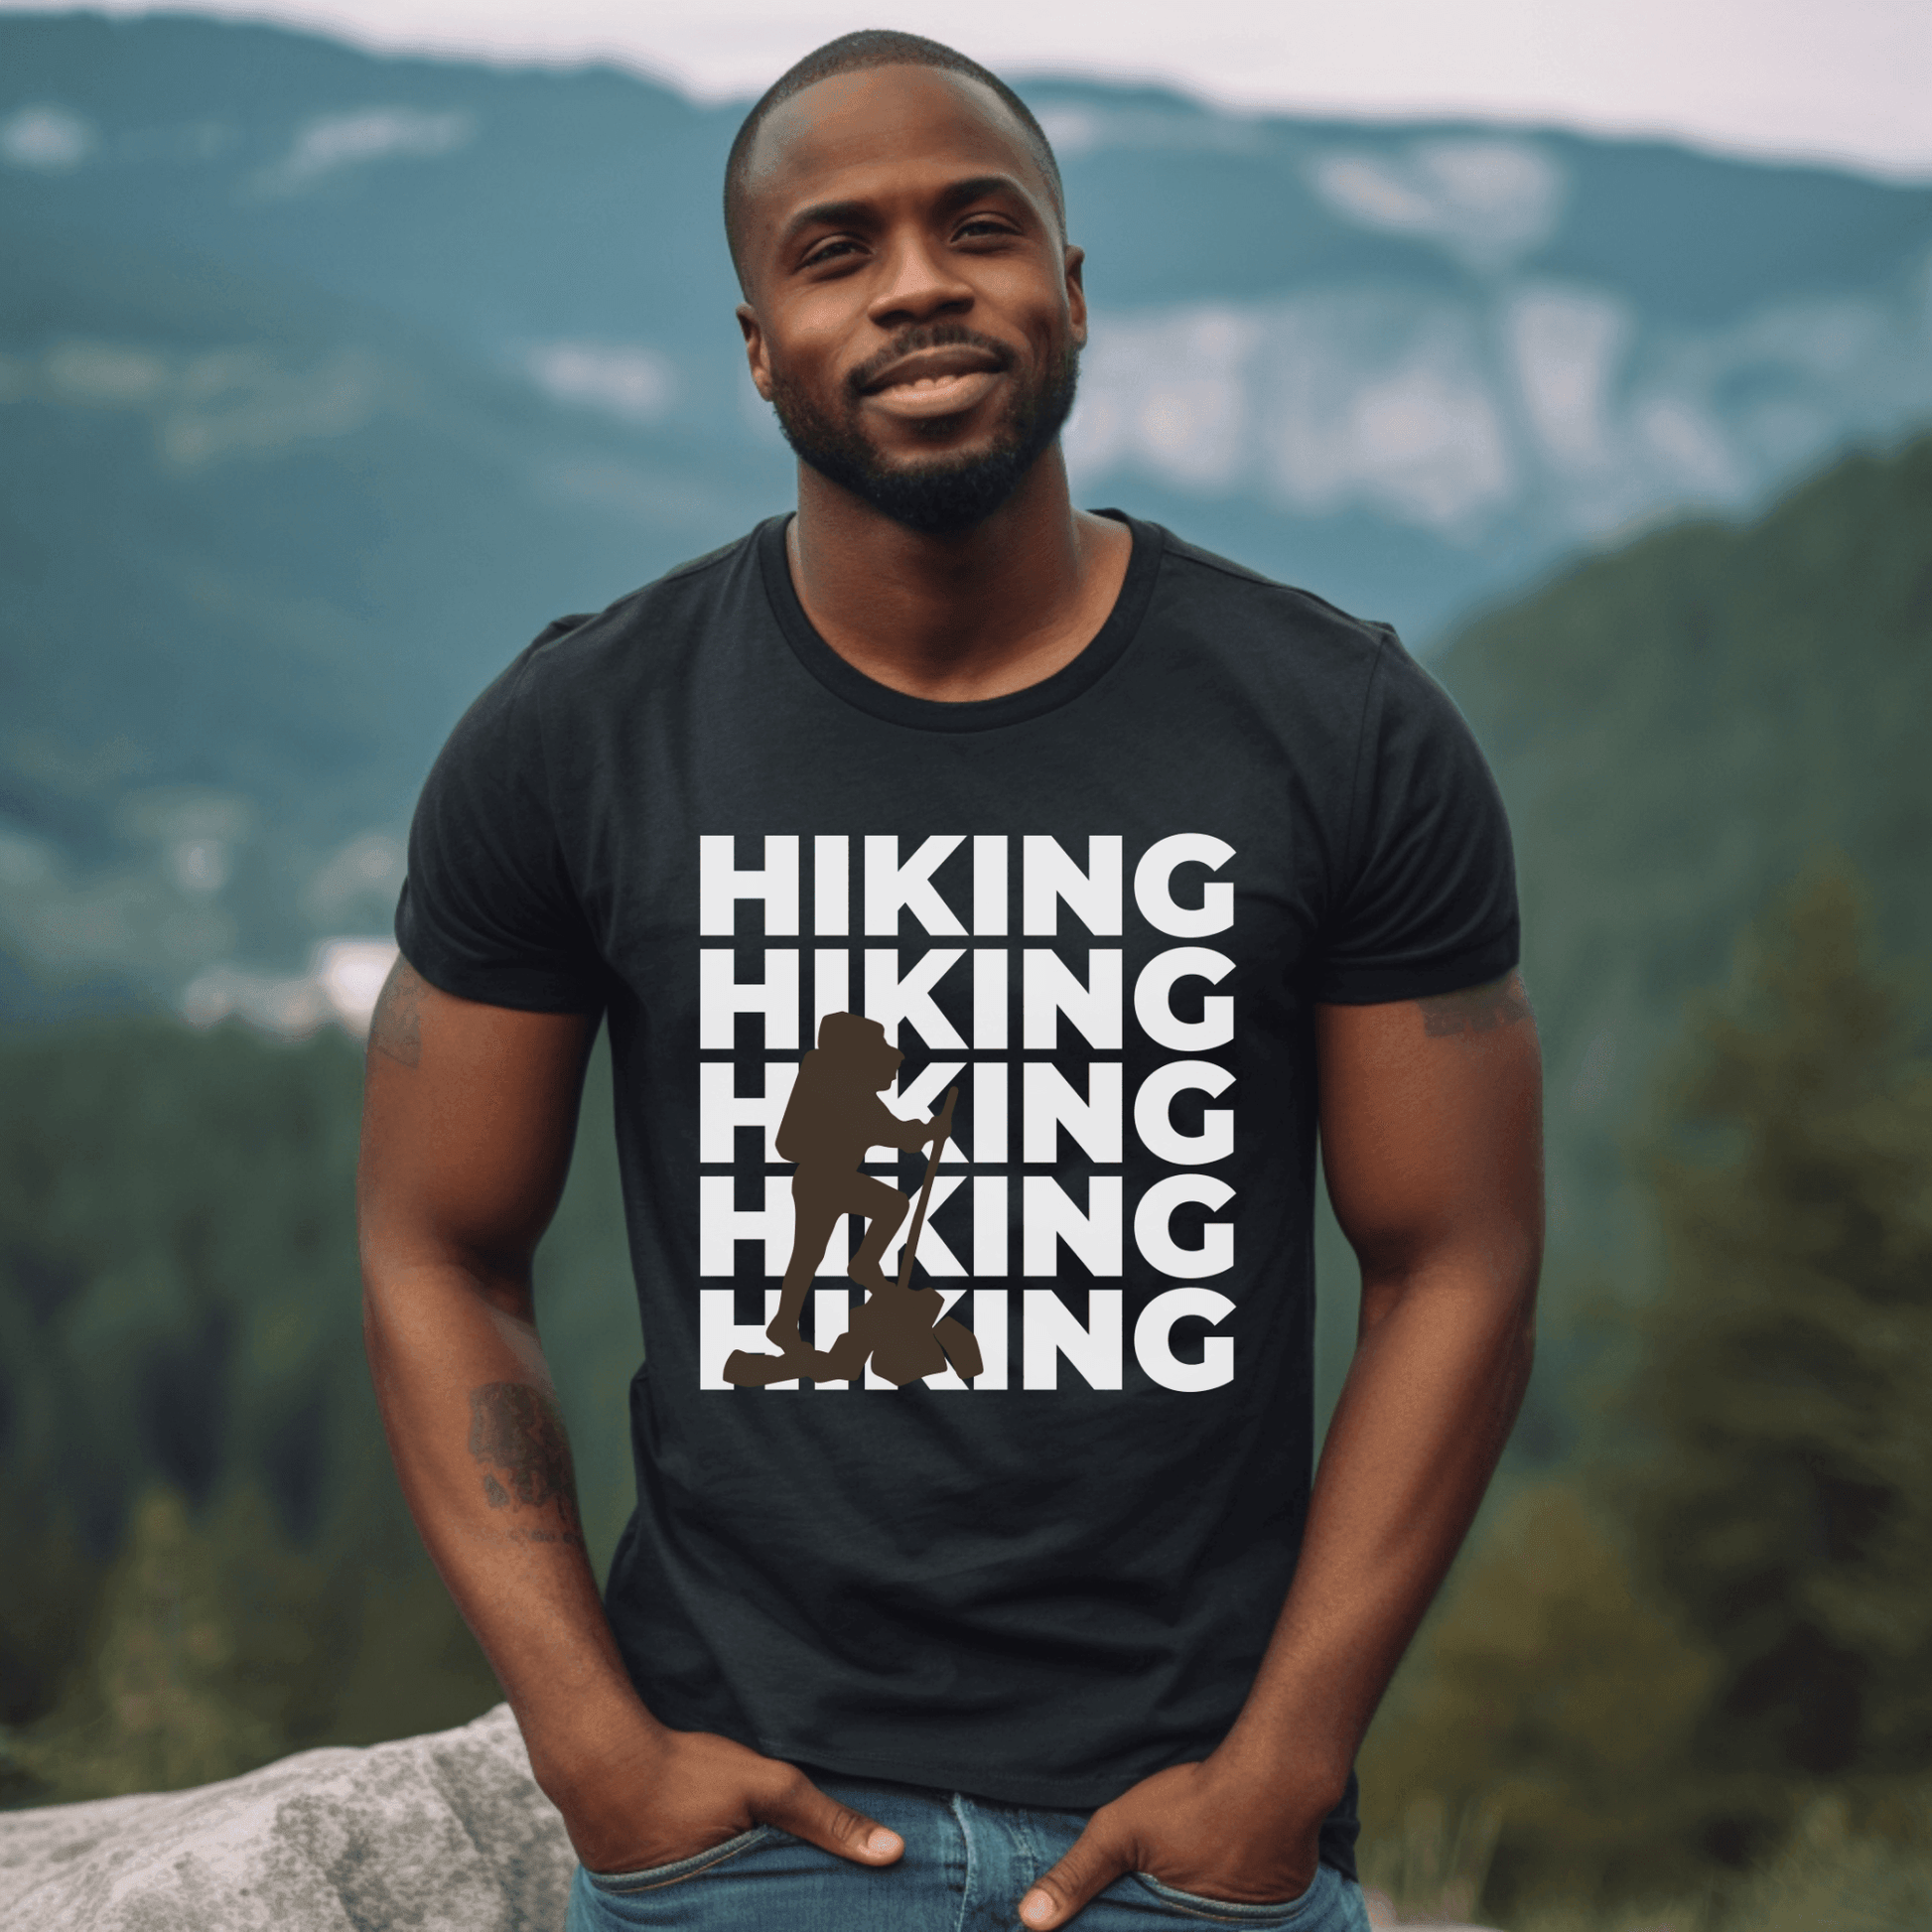 Hiking Silhouette T-Shirt - Adventure Threads Company